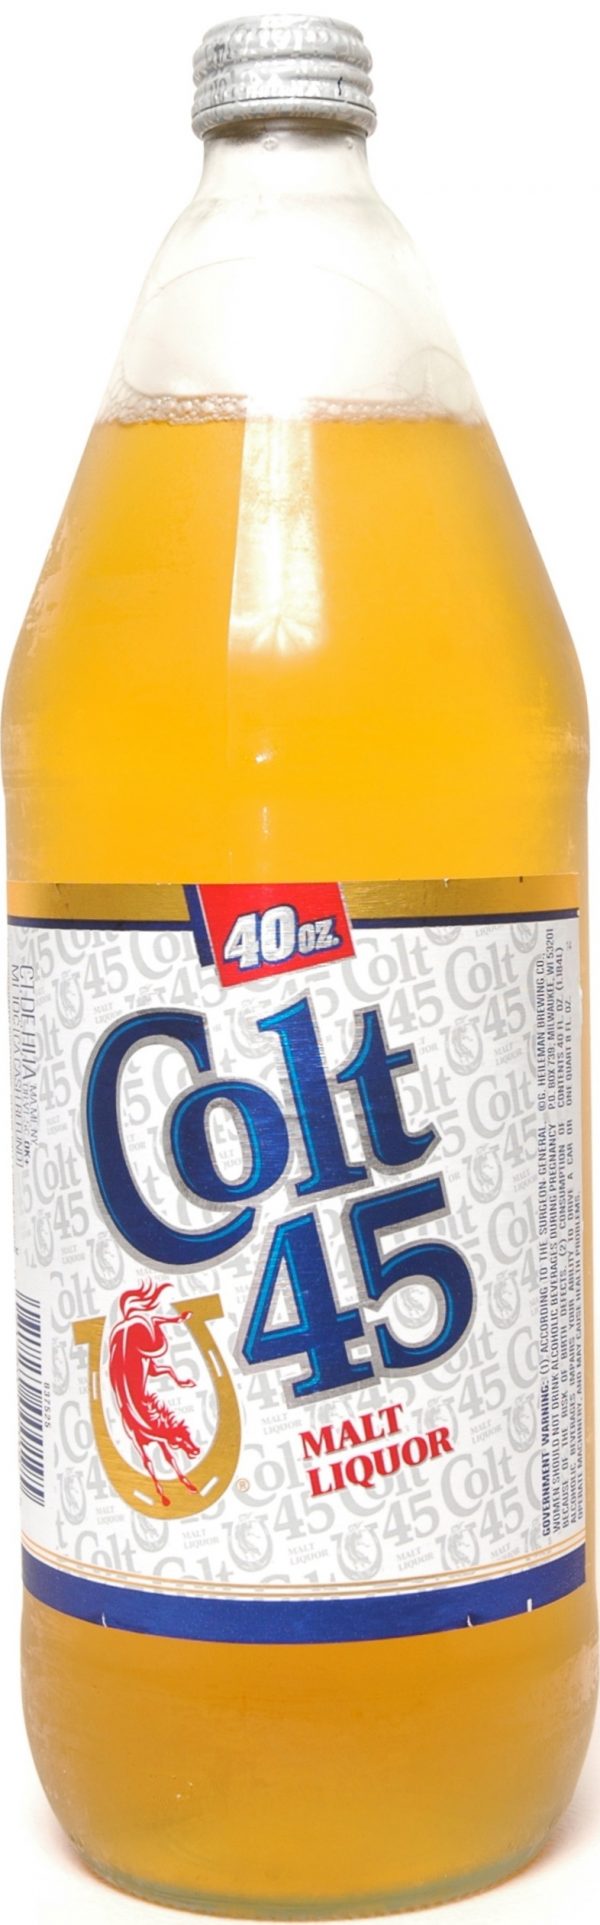 colt 45 malt liquor review